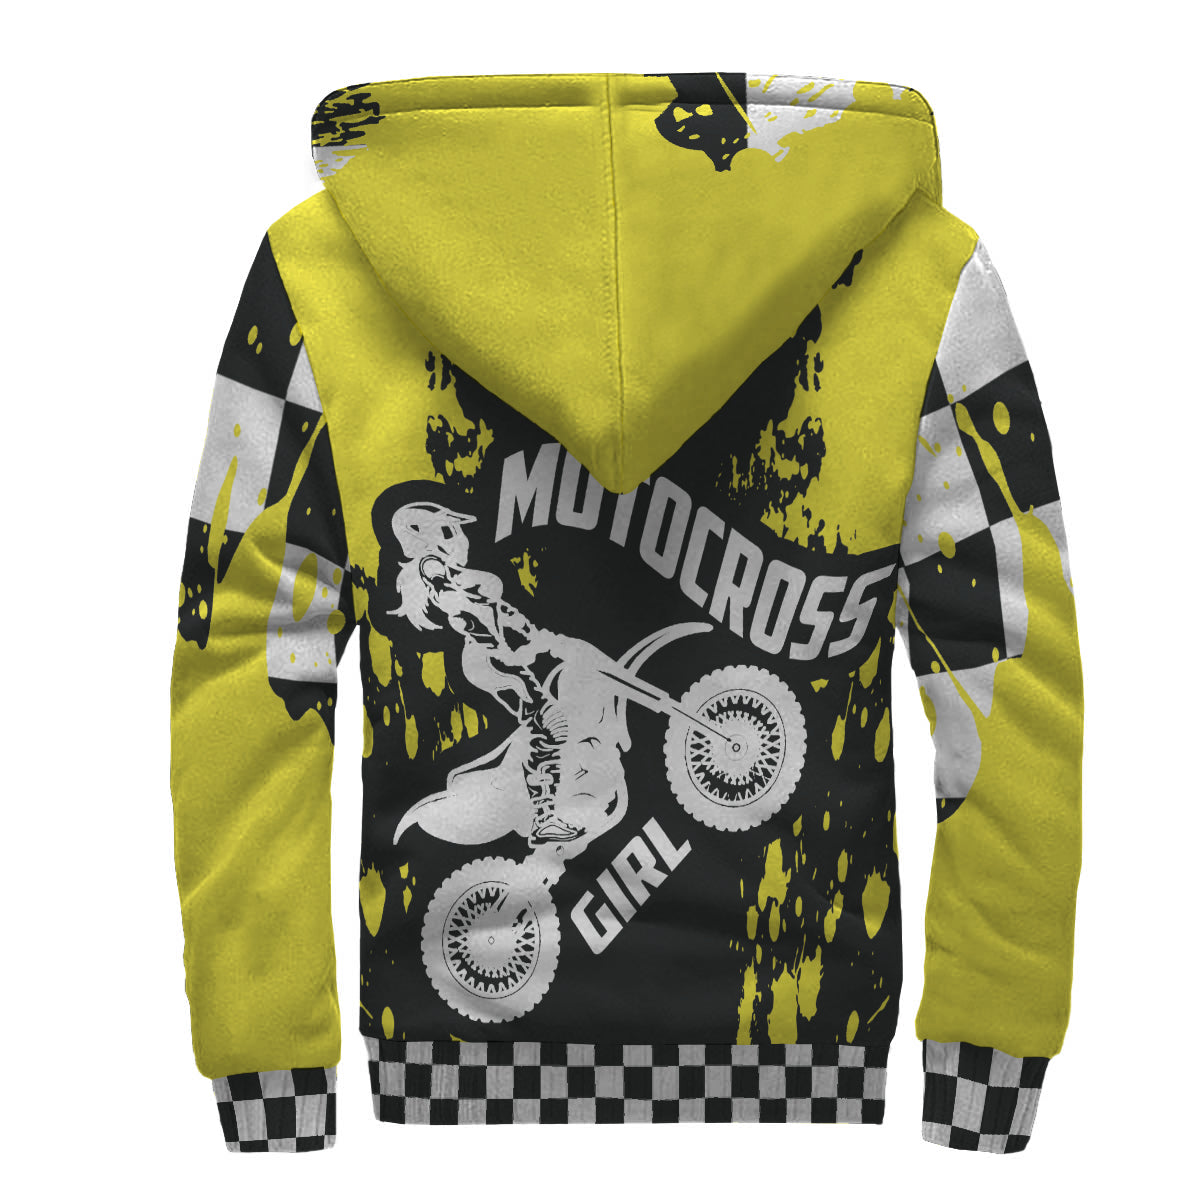 Motocross Girl Sherpa Jacket